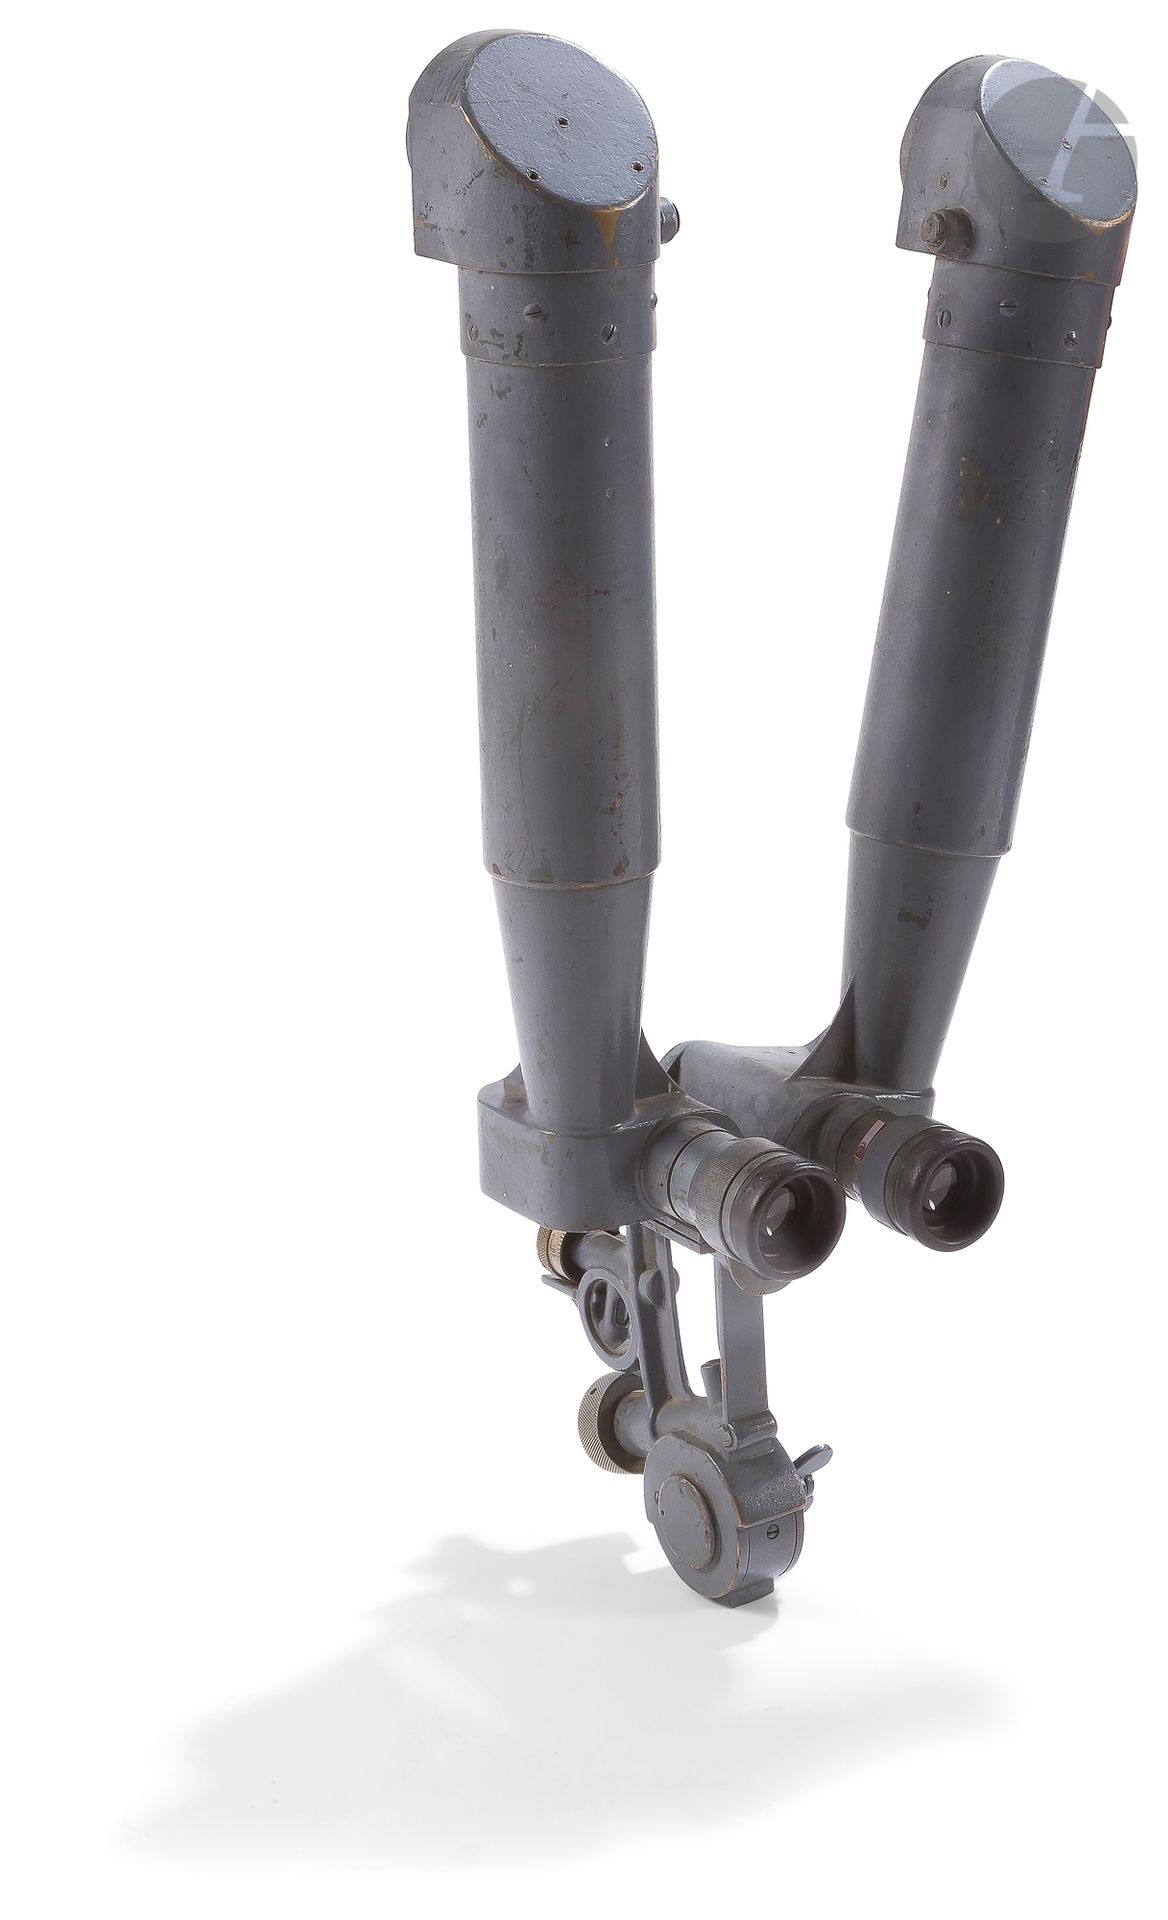 Null 一对德国SF09双筒望远镜，灰色涂装。
标有 "SF 09 MR 30630"。
由柏林戈尔茨公司制造。
A.B.E. 1st G.M.